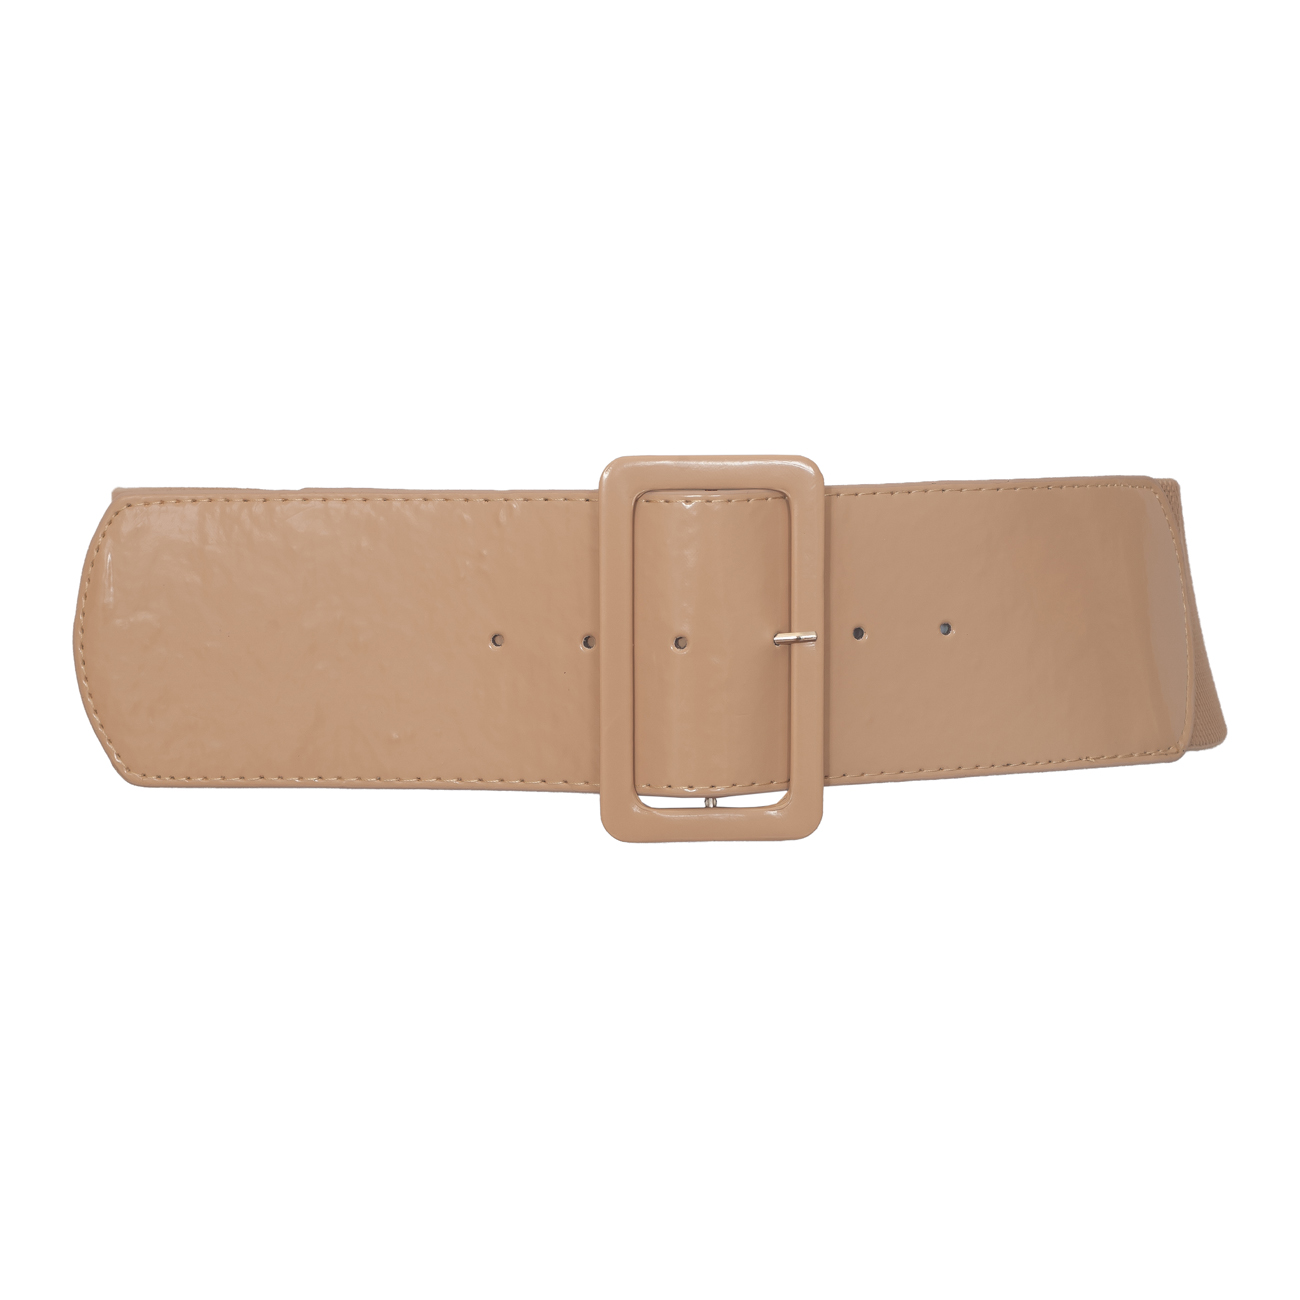 Plus Size Wide Patent Leather Fashion Belt Beige Photo 1